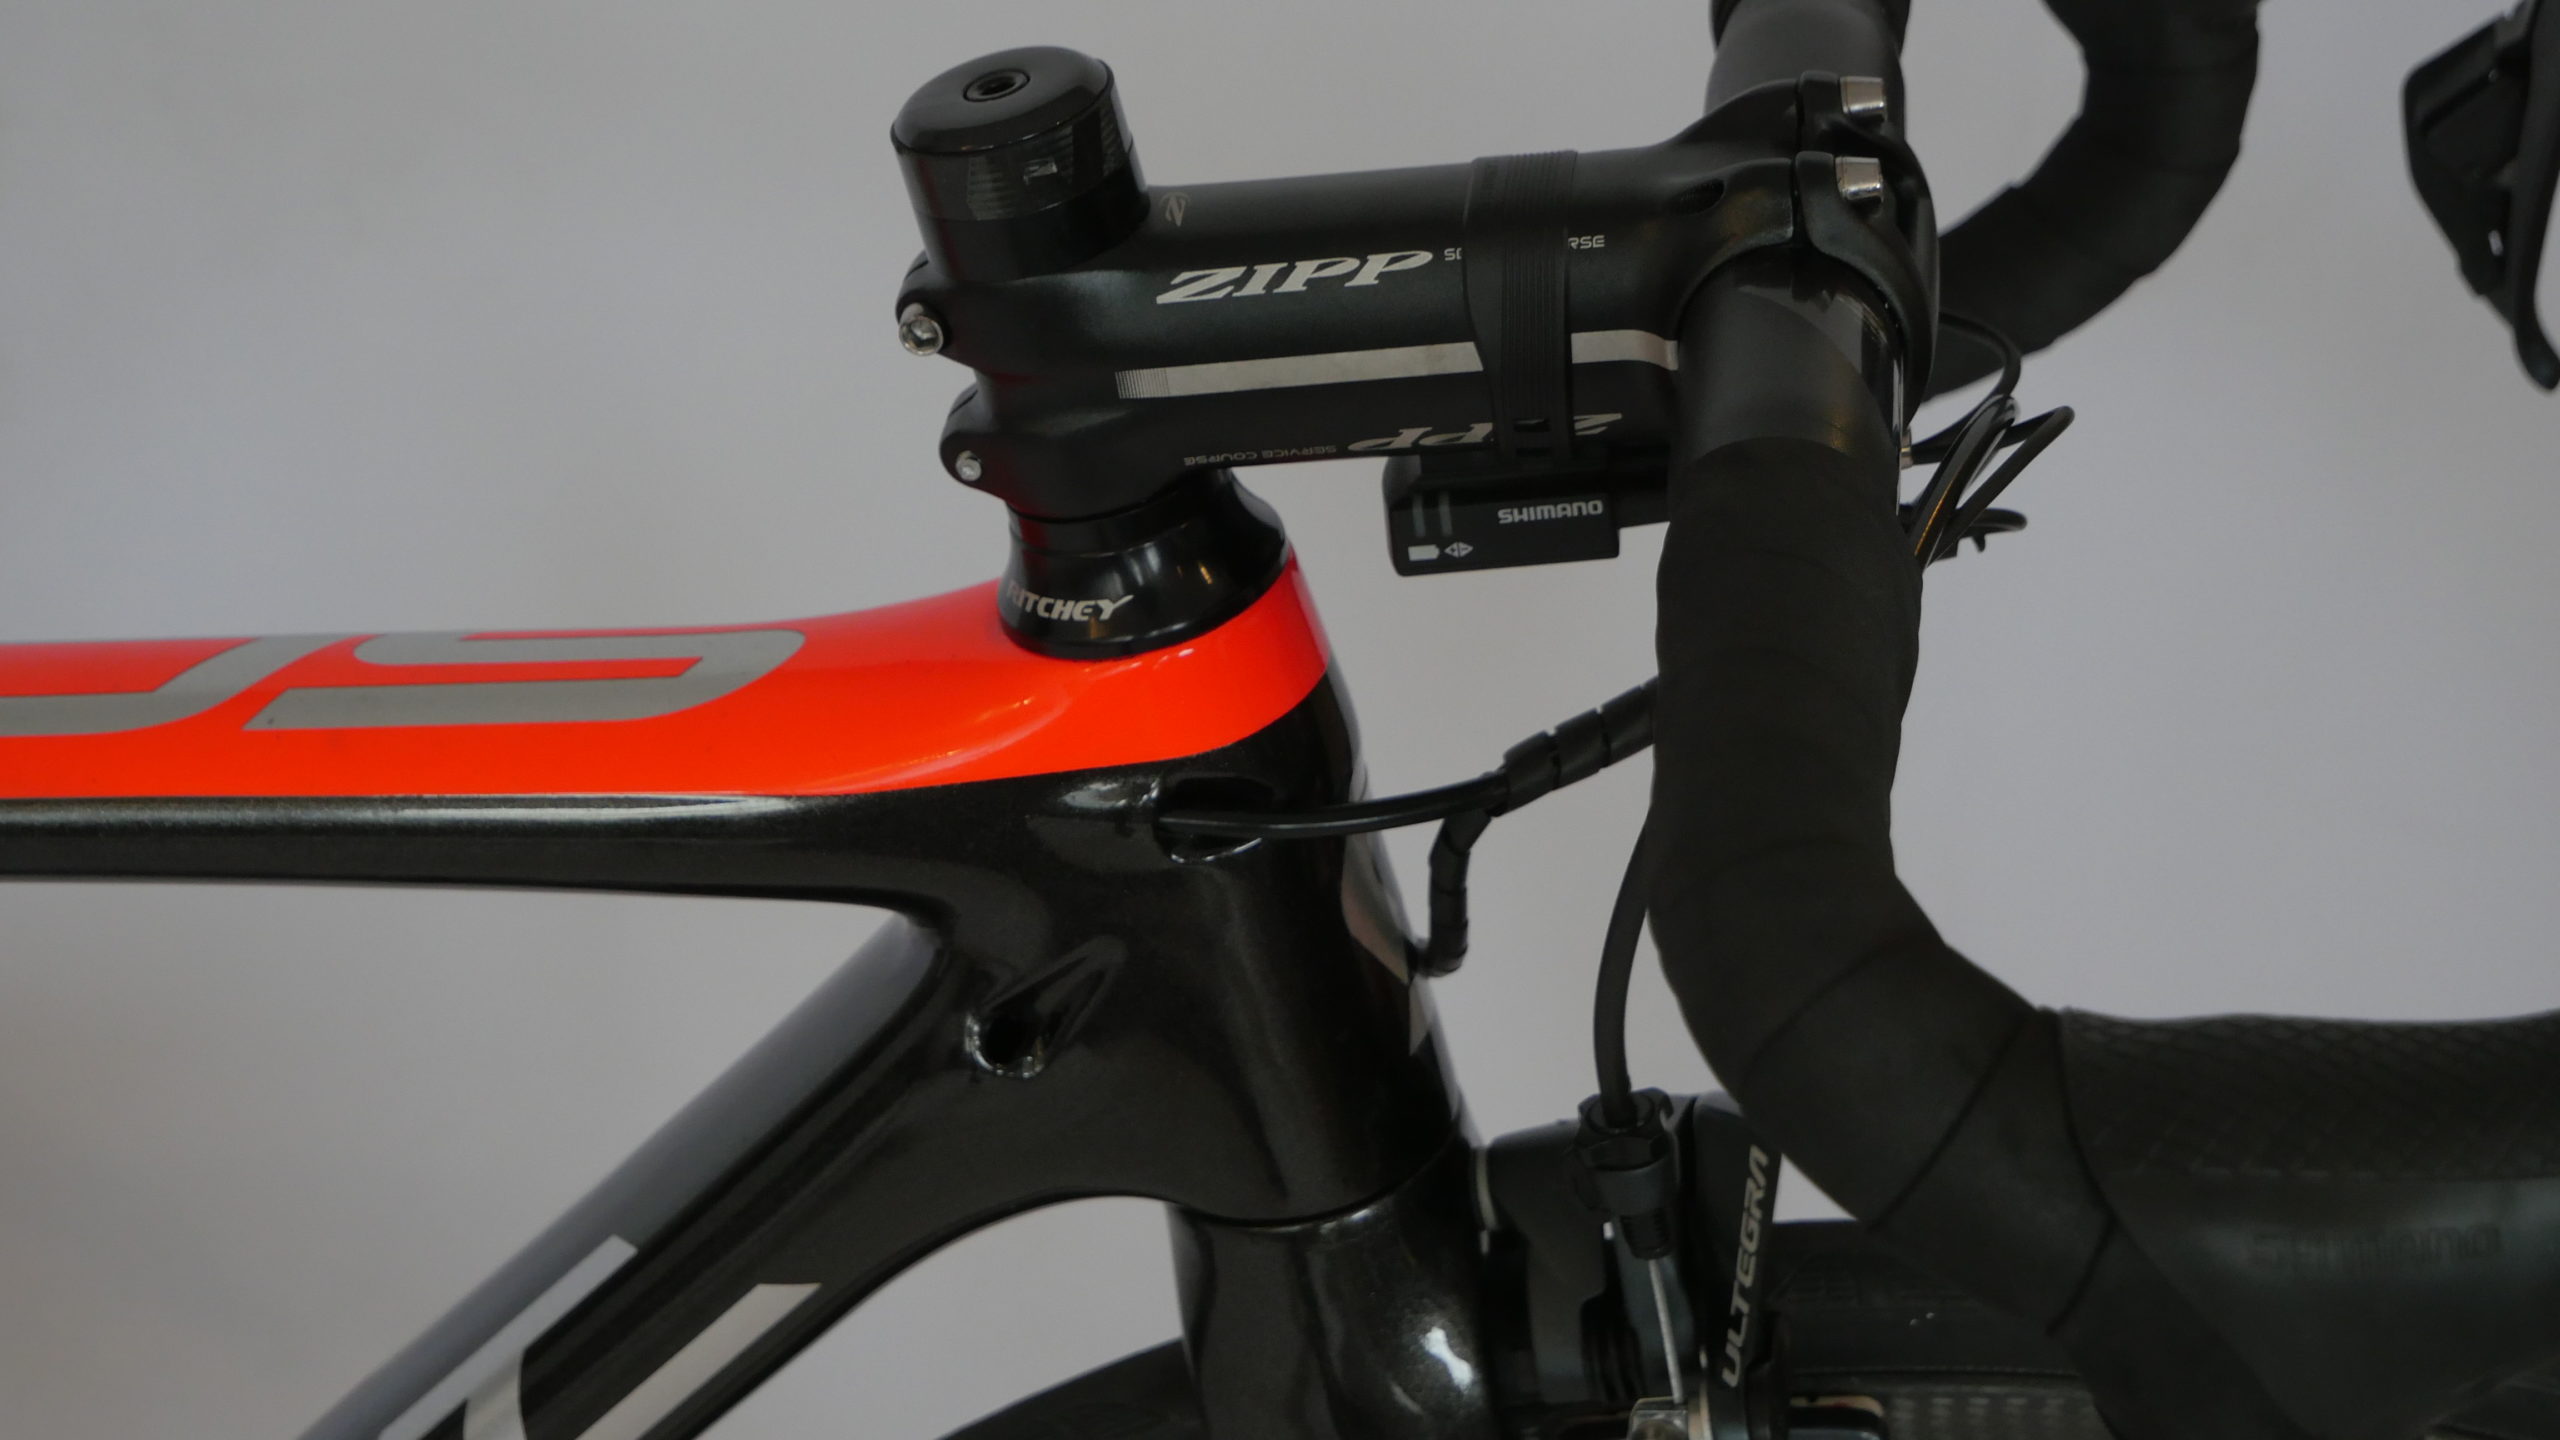 Road Bike Scott Addict Shimano Ultegra Di2 Noir / Gris / Orange